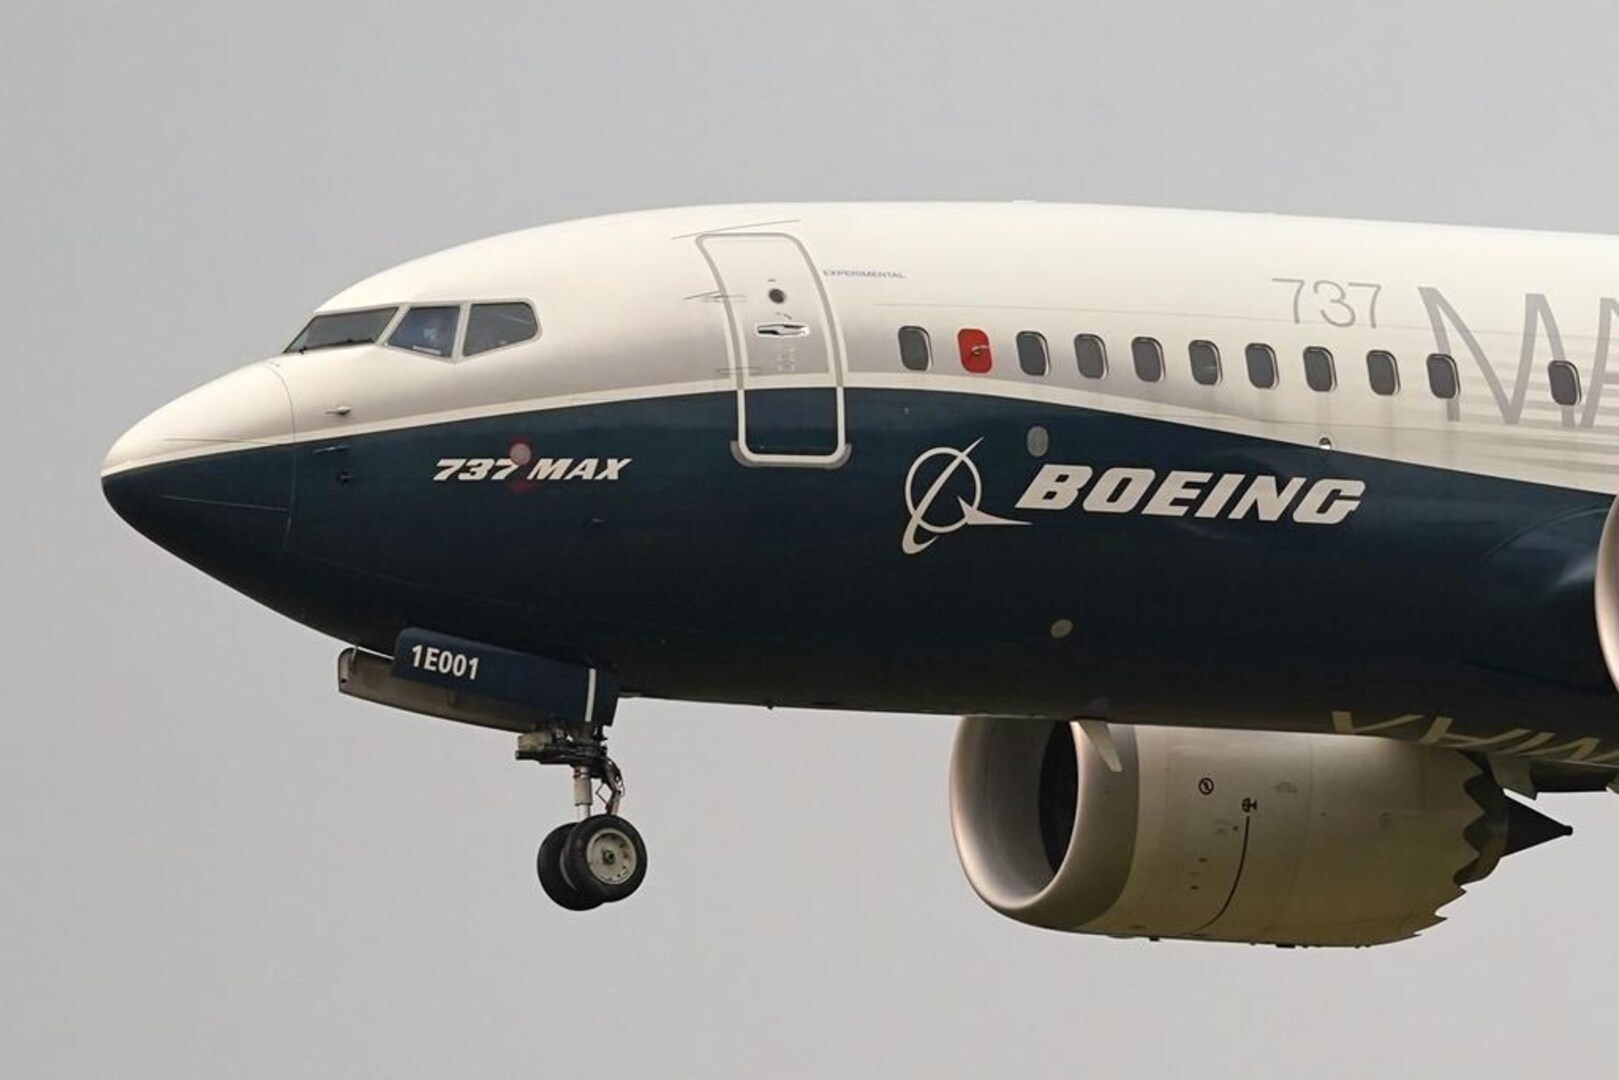 U.S. prosecutors pursuing charges against Boeing